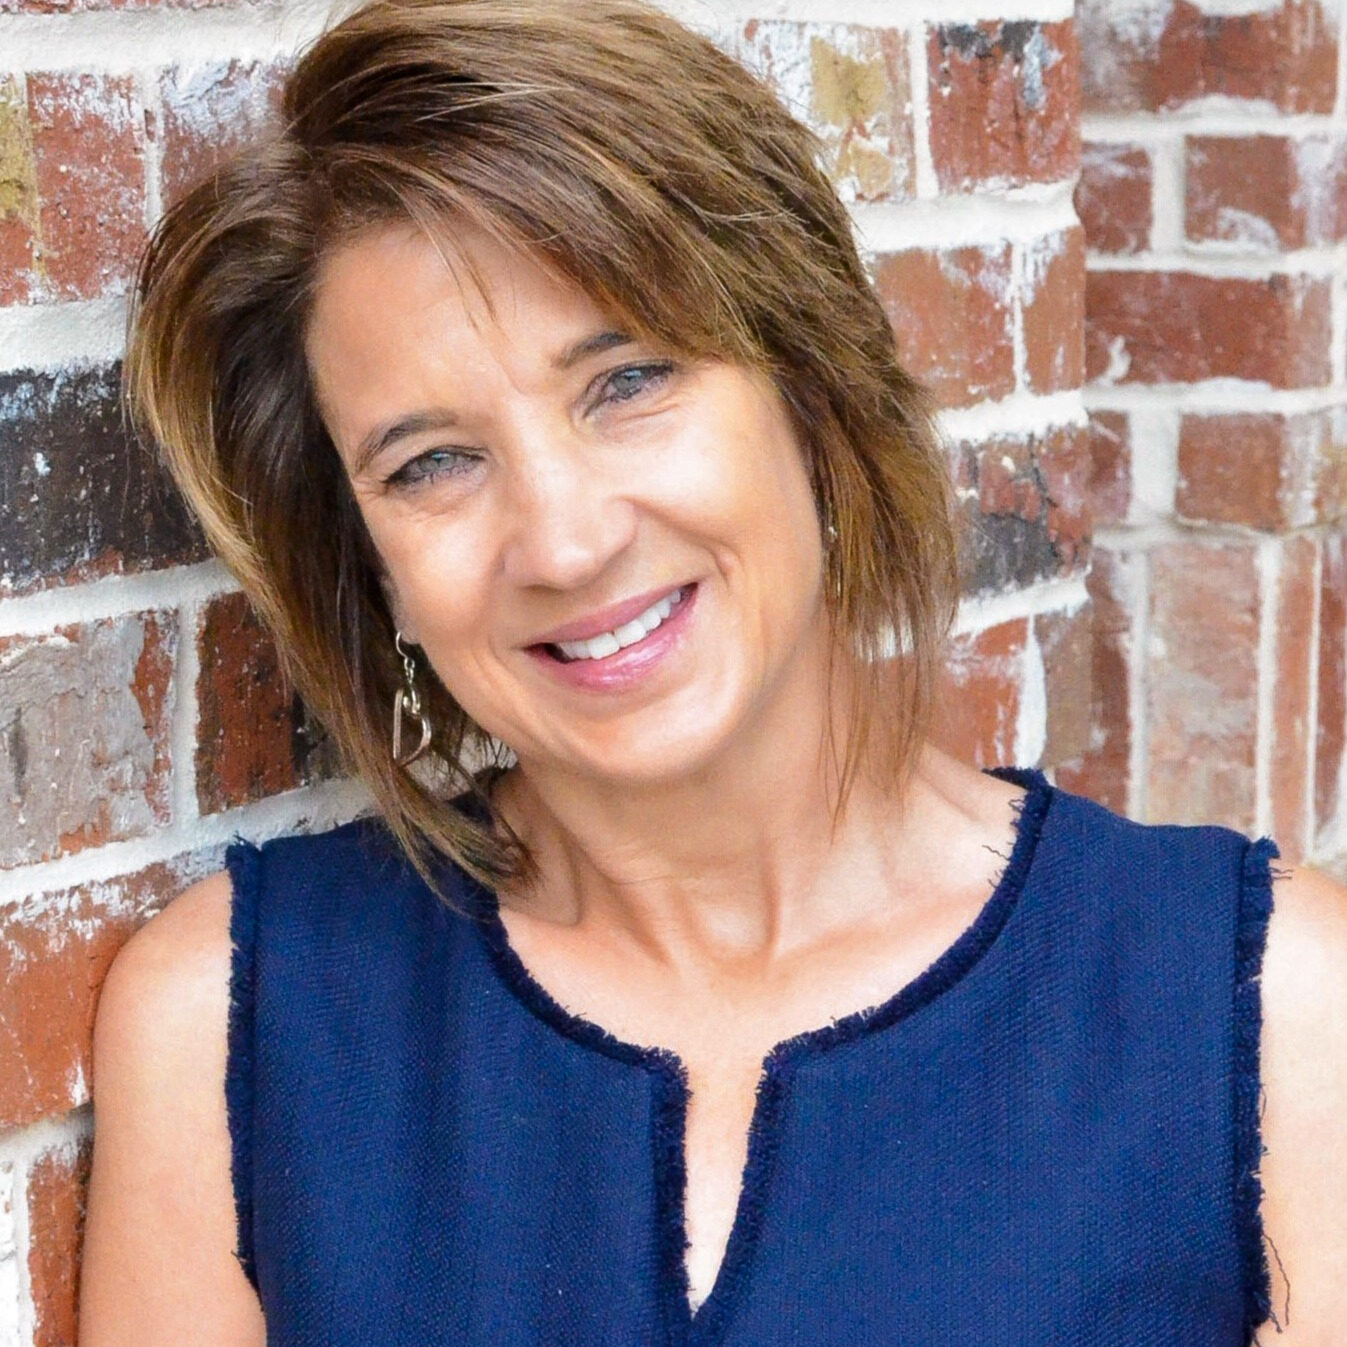 Mortgage partner at Supreme Lending Southeast, meet Lori Kirn